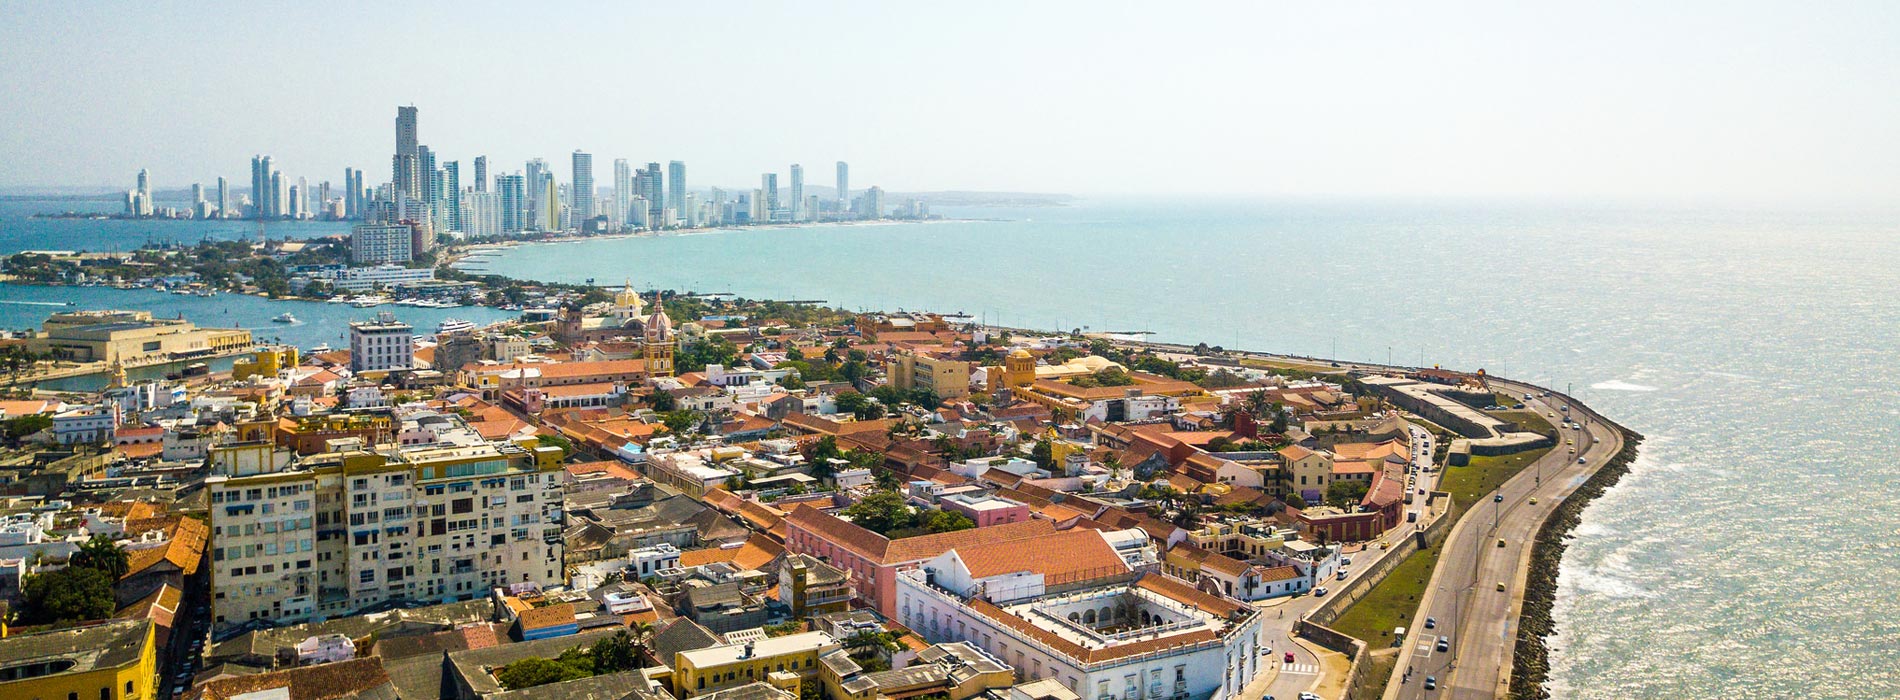 Cartagena de Indias: Beauty, commodity and romance